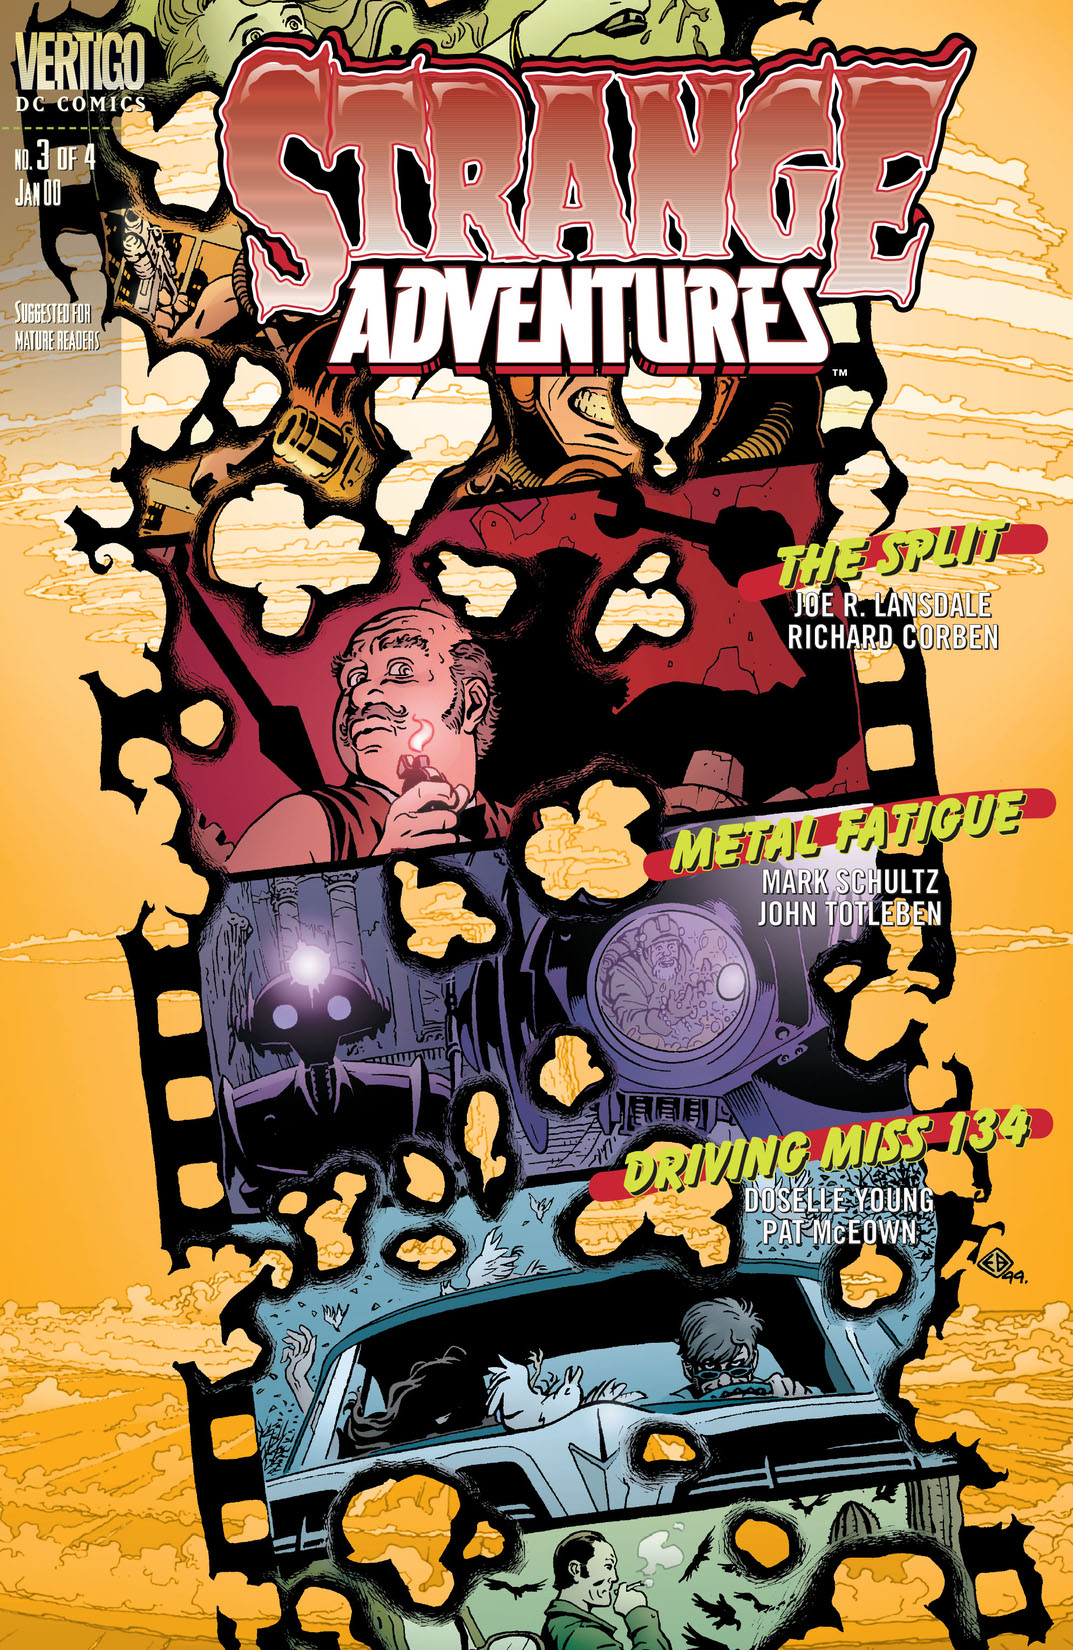 Strange Adventures (1999-) #3 preview images